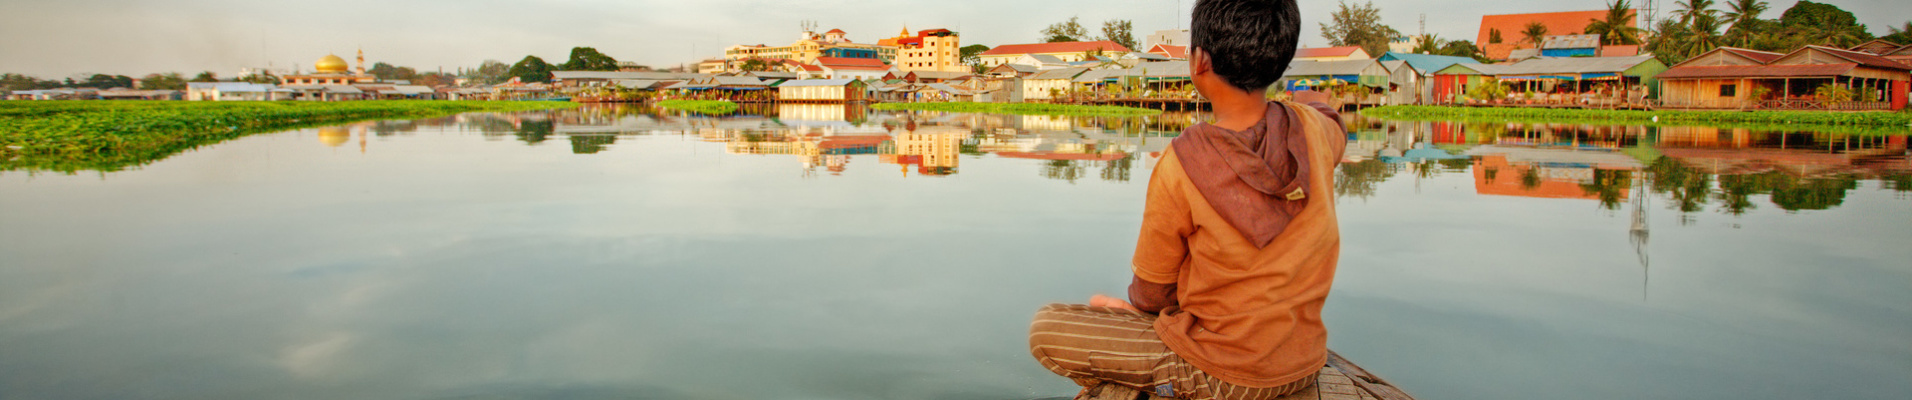 enfant cambodge lac tonle sap